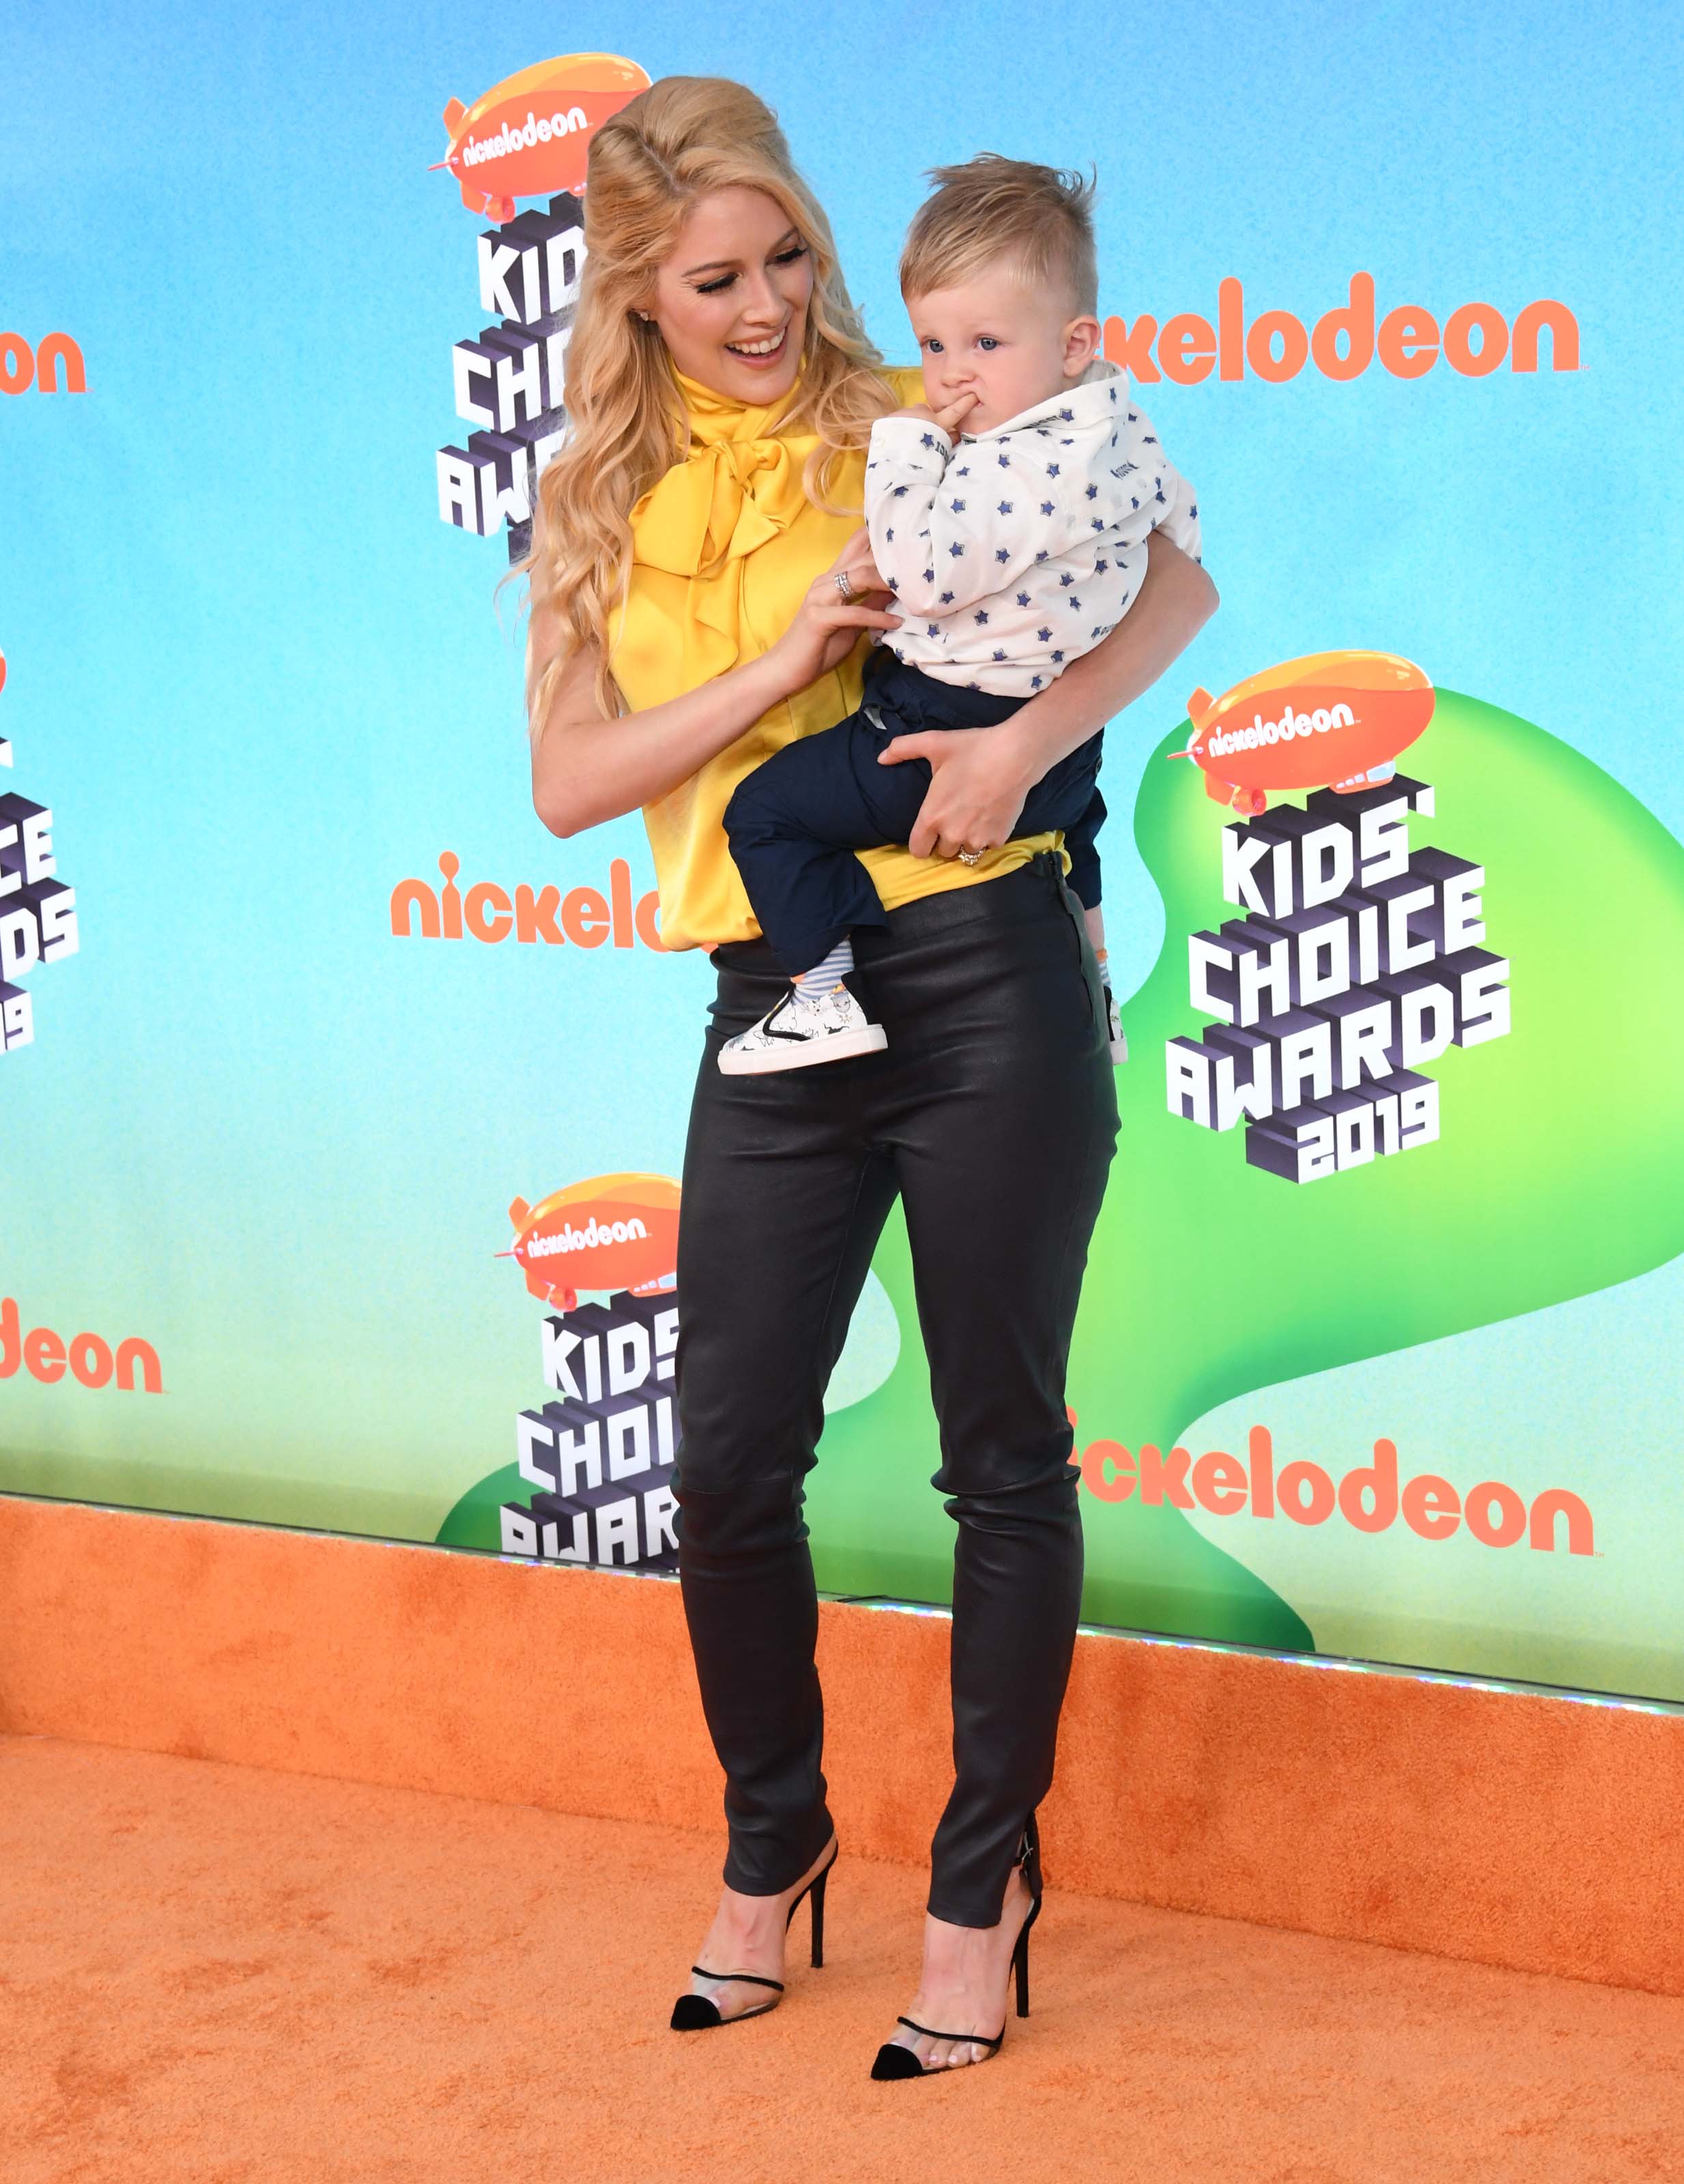 Heidi Montag attending 2019 Kids Choice Awards